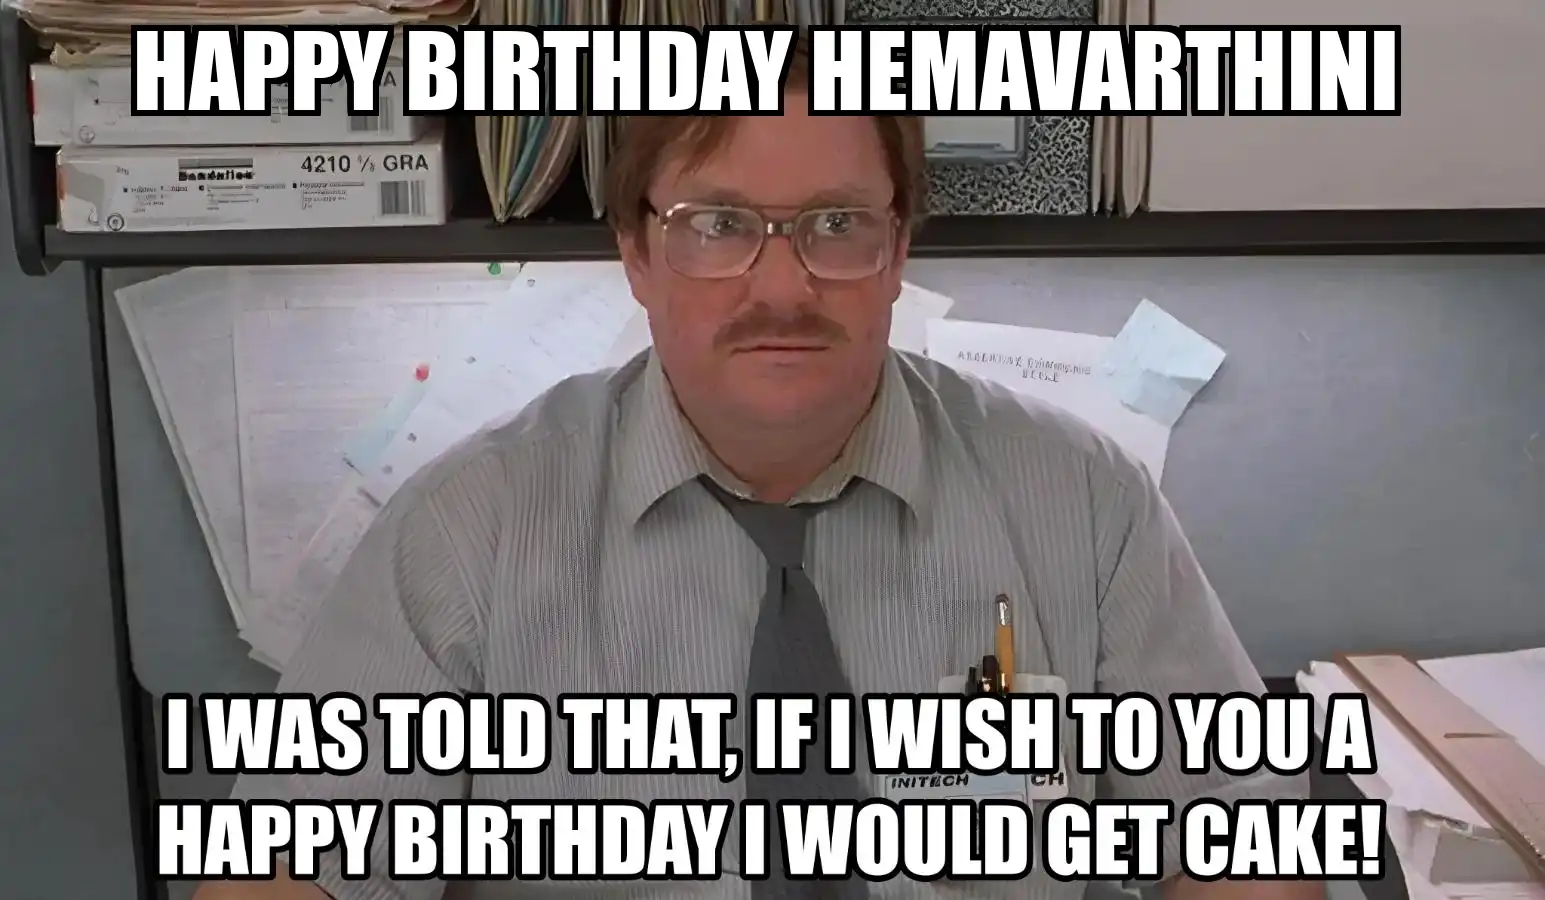 Happy Birthday Hemavarthini I Would Get A Cake Meme